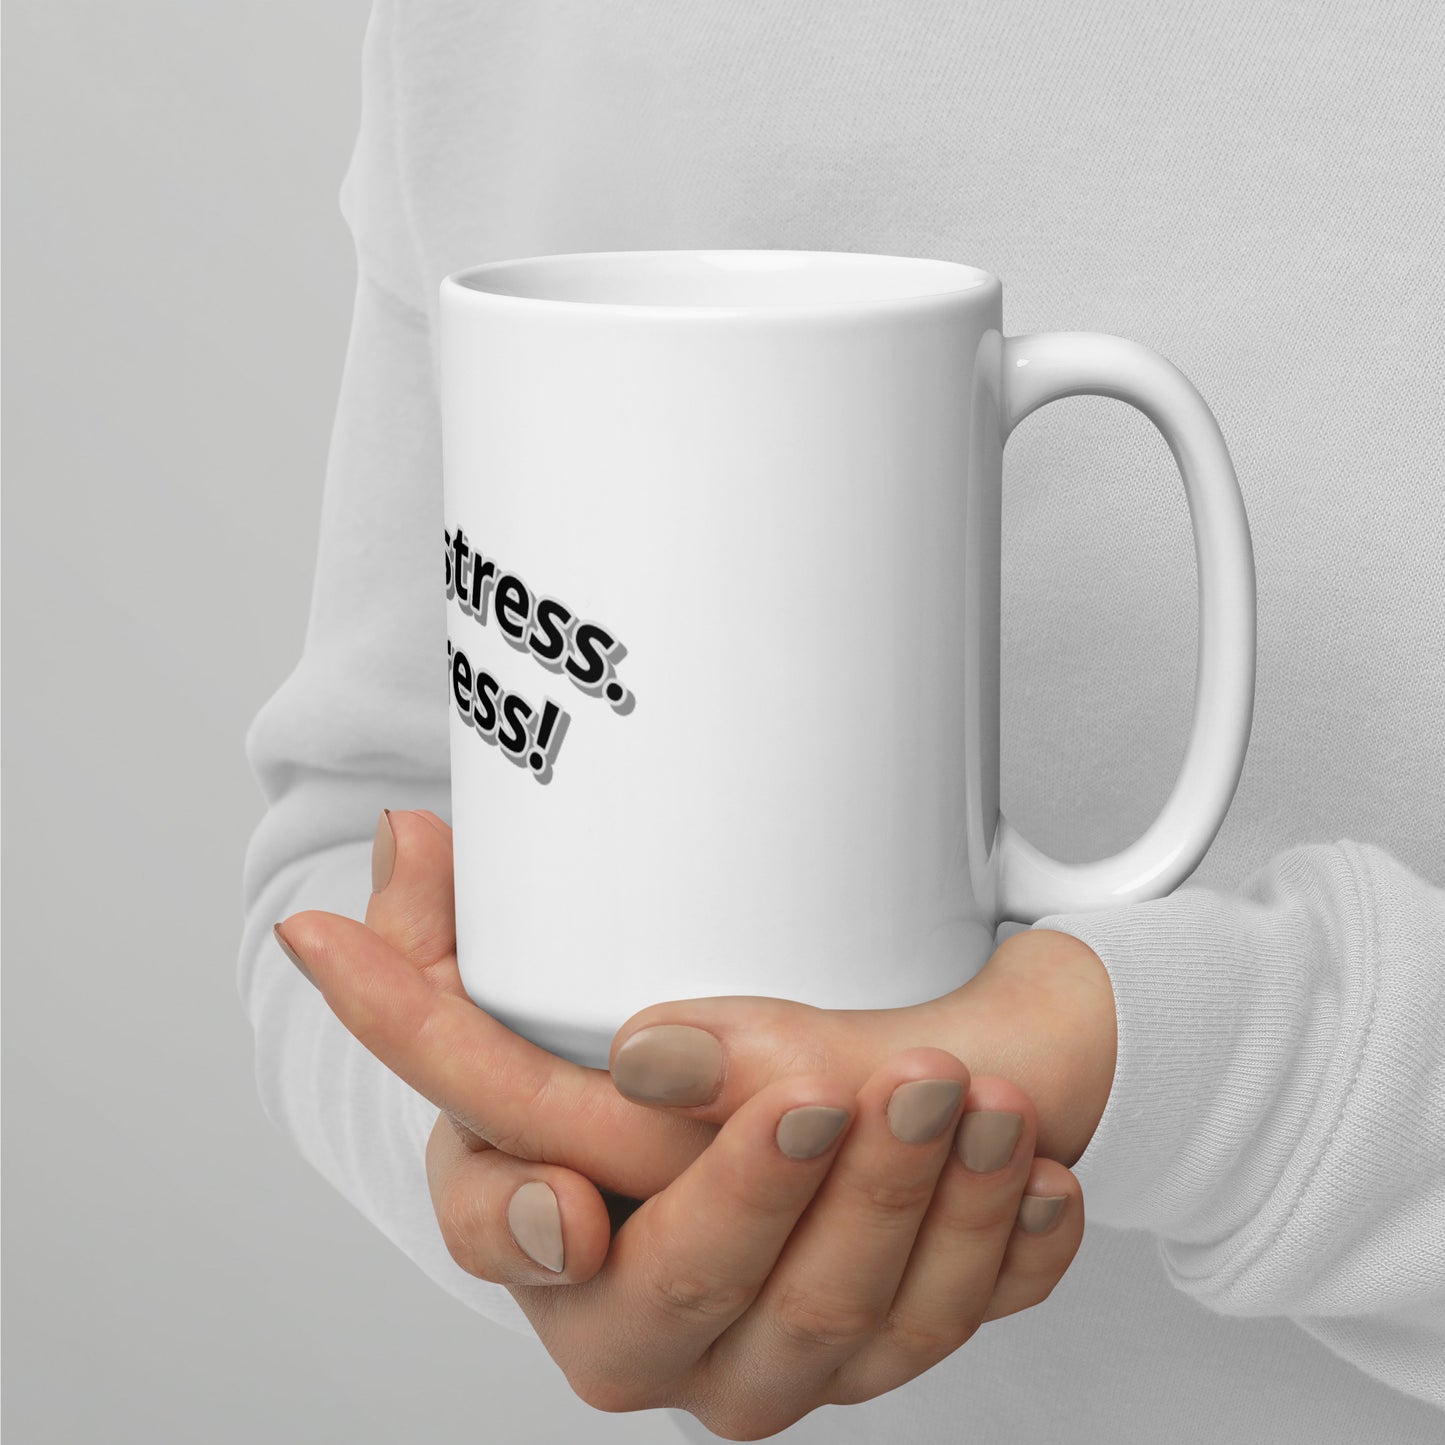 I don't stress. I Express! White glossy mug